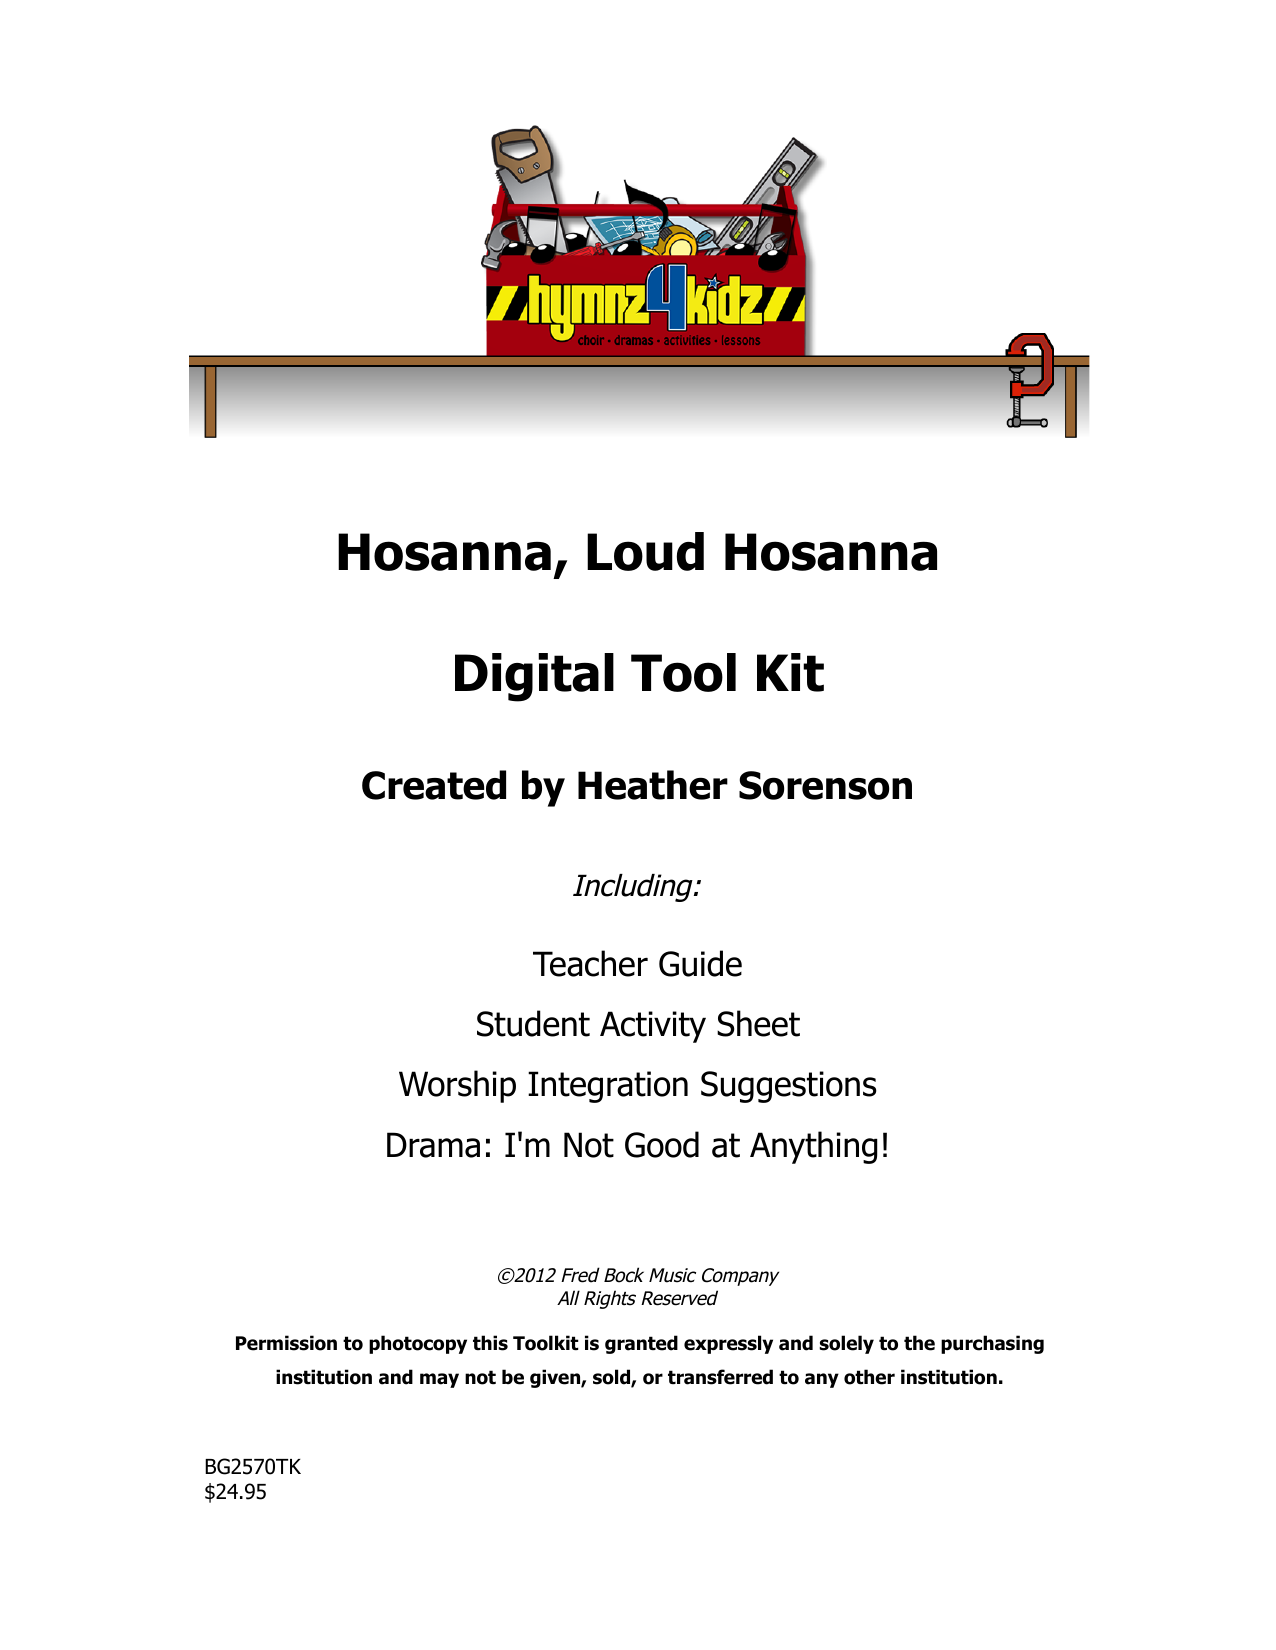 Download Heather Sorenson Hosanna, Loud Hosanna Sheet Music and learn how to play Choir Tool Kit PDF digital score in minutes